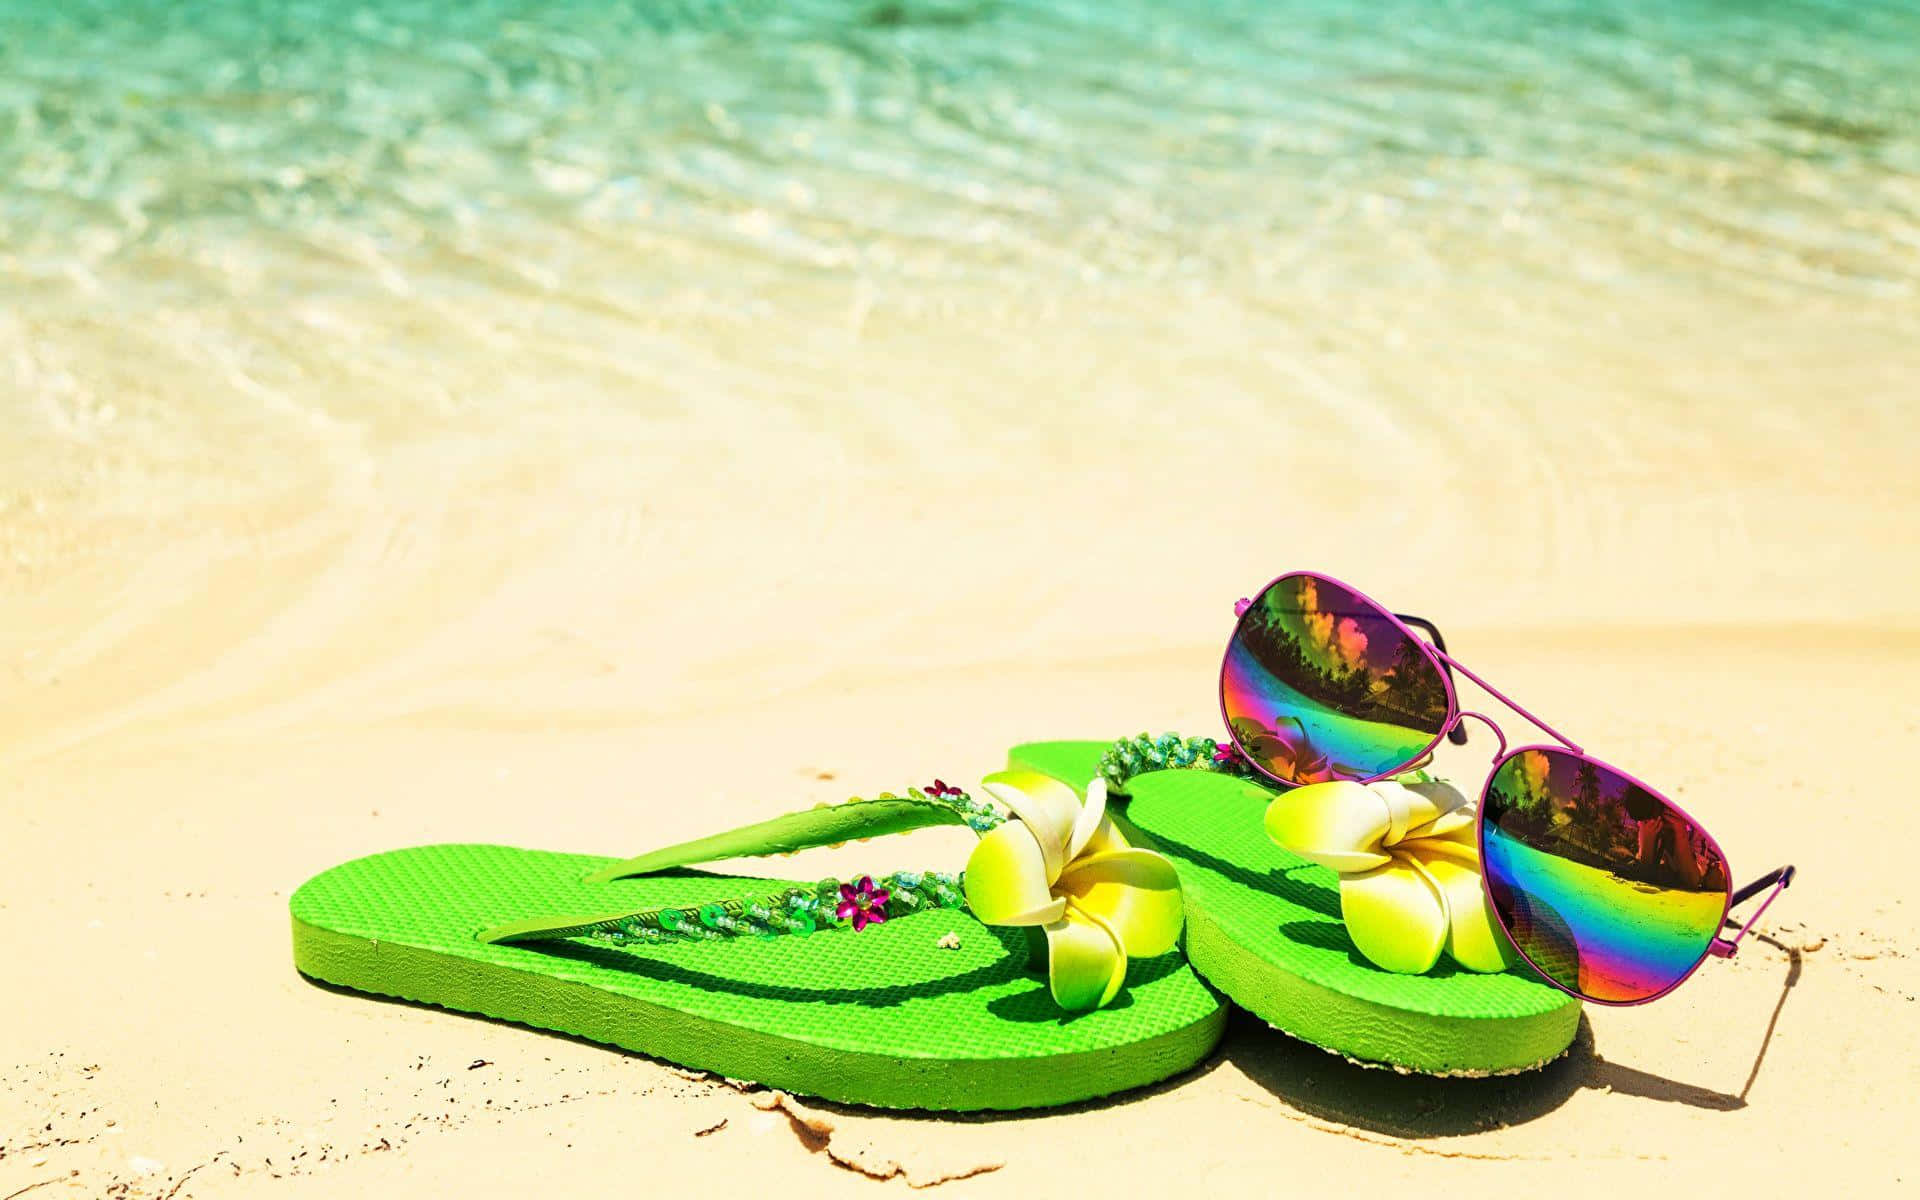 Download Vibrant Beach Sandals on Sandy Shore Wallpaper | Wallpapers.com